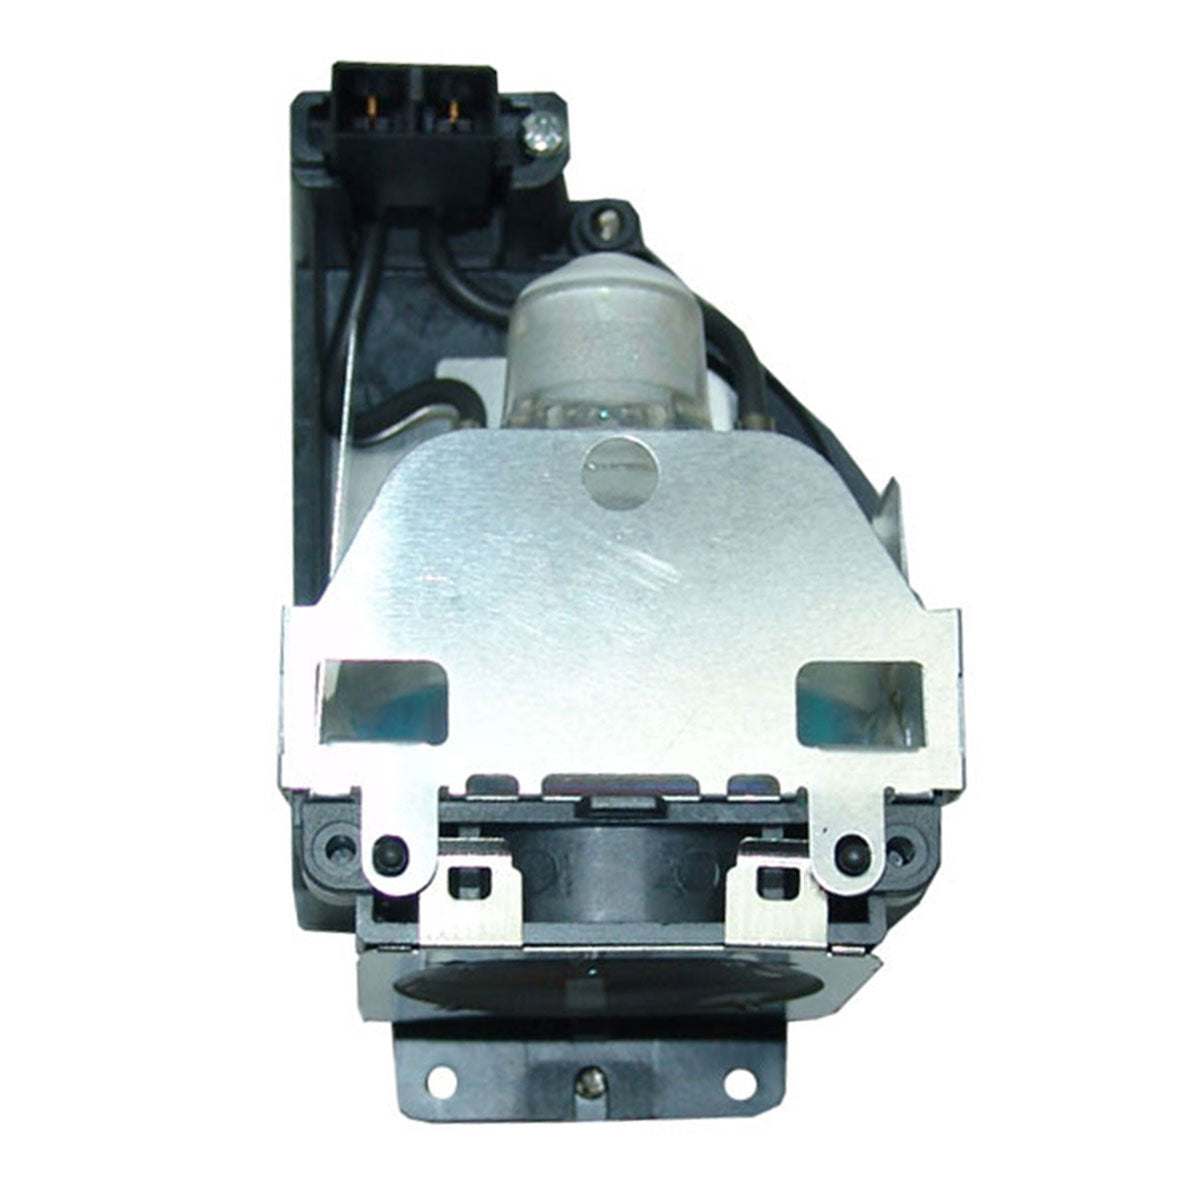 INGSYSTEM POA-LMP103 Compatible Projector Lamp Module